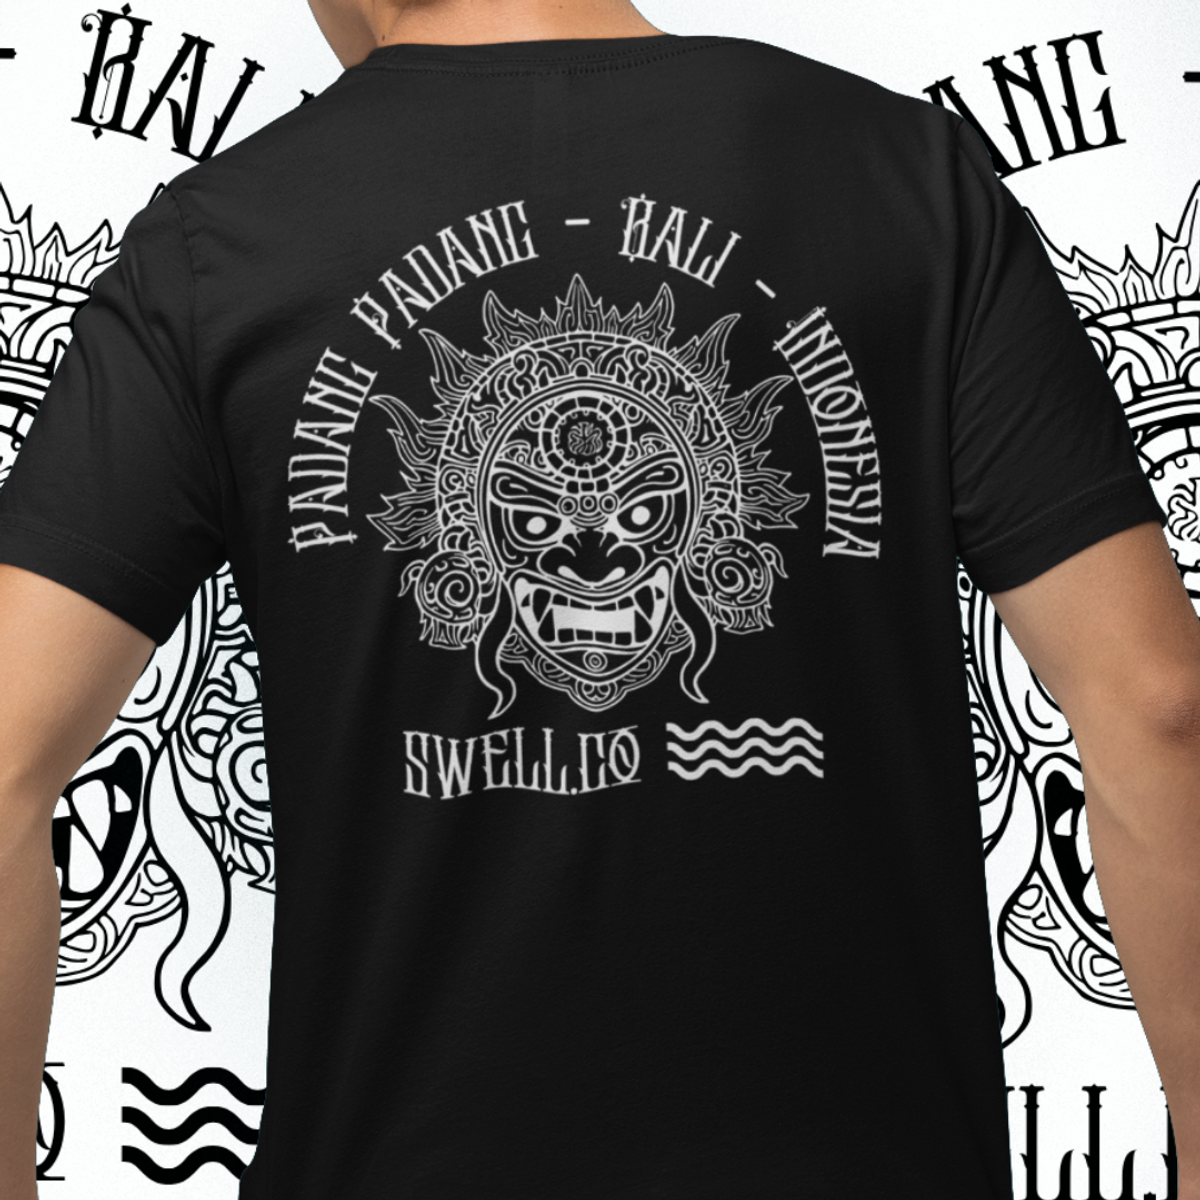 Nome do produto: Camiseta Swell.Co PadangPadang